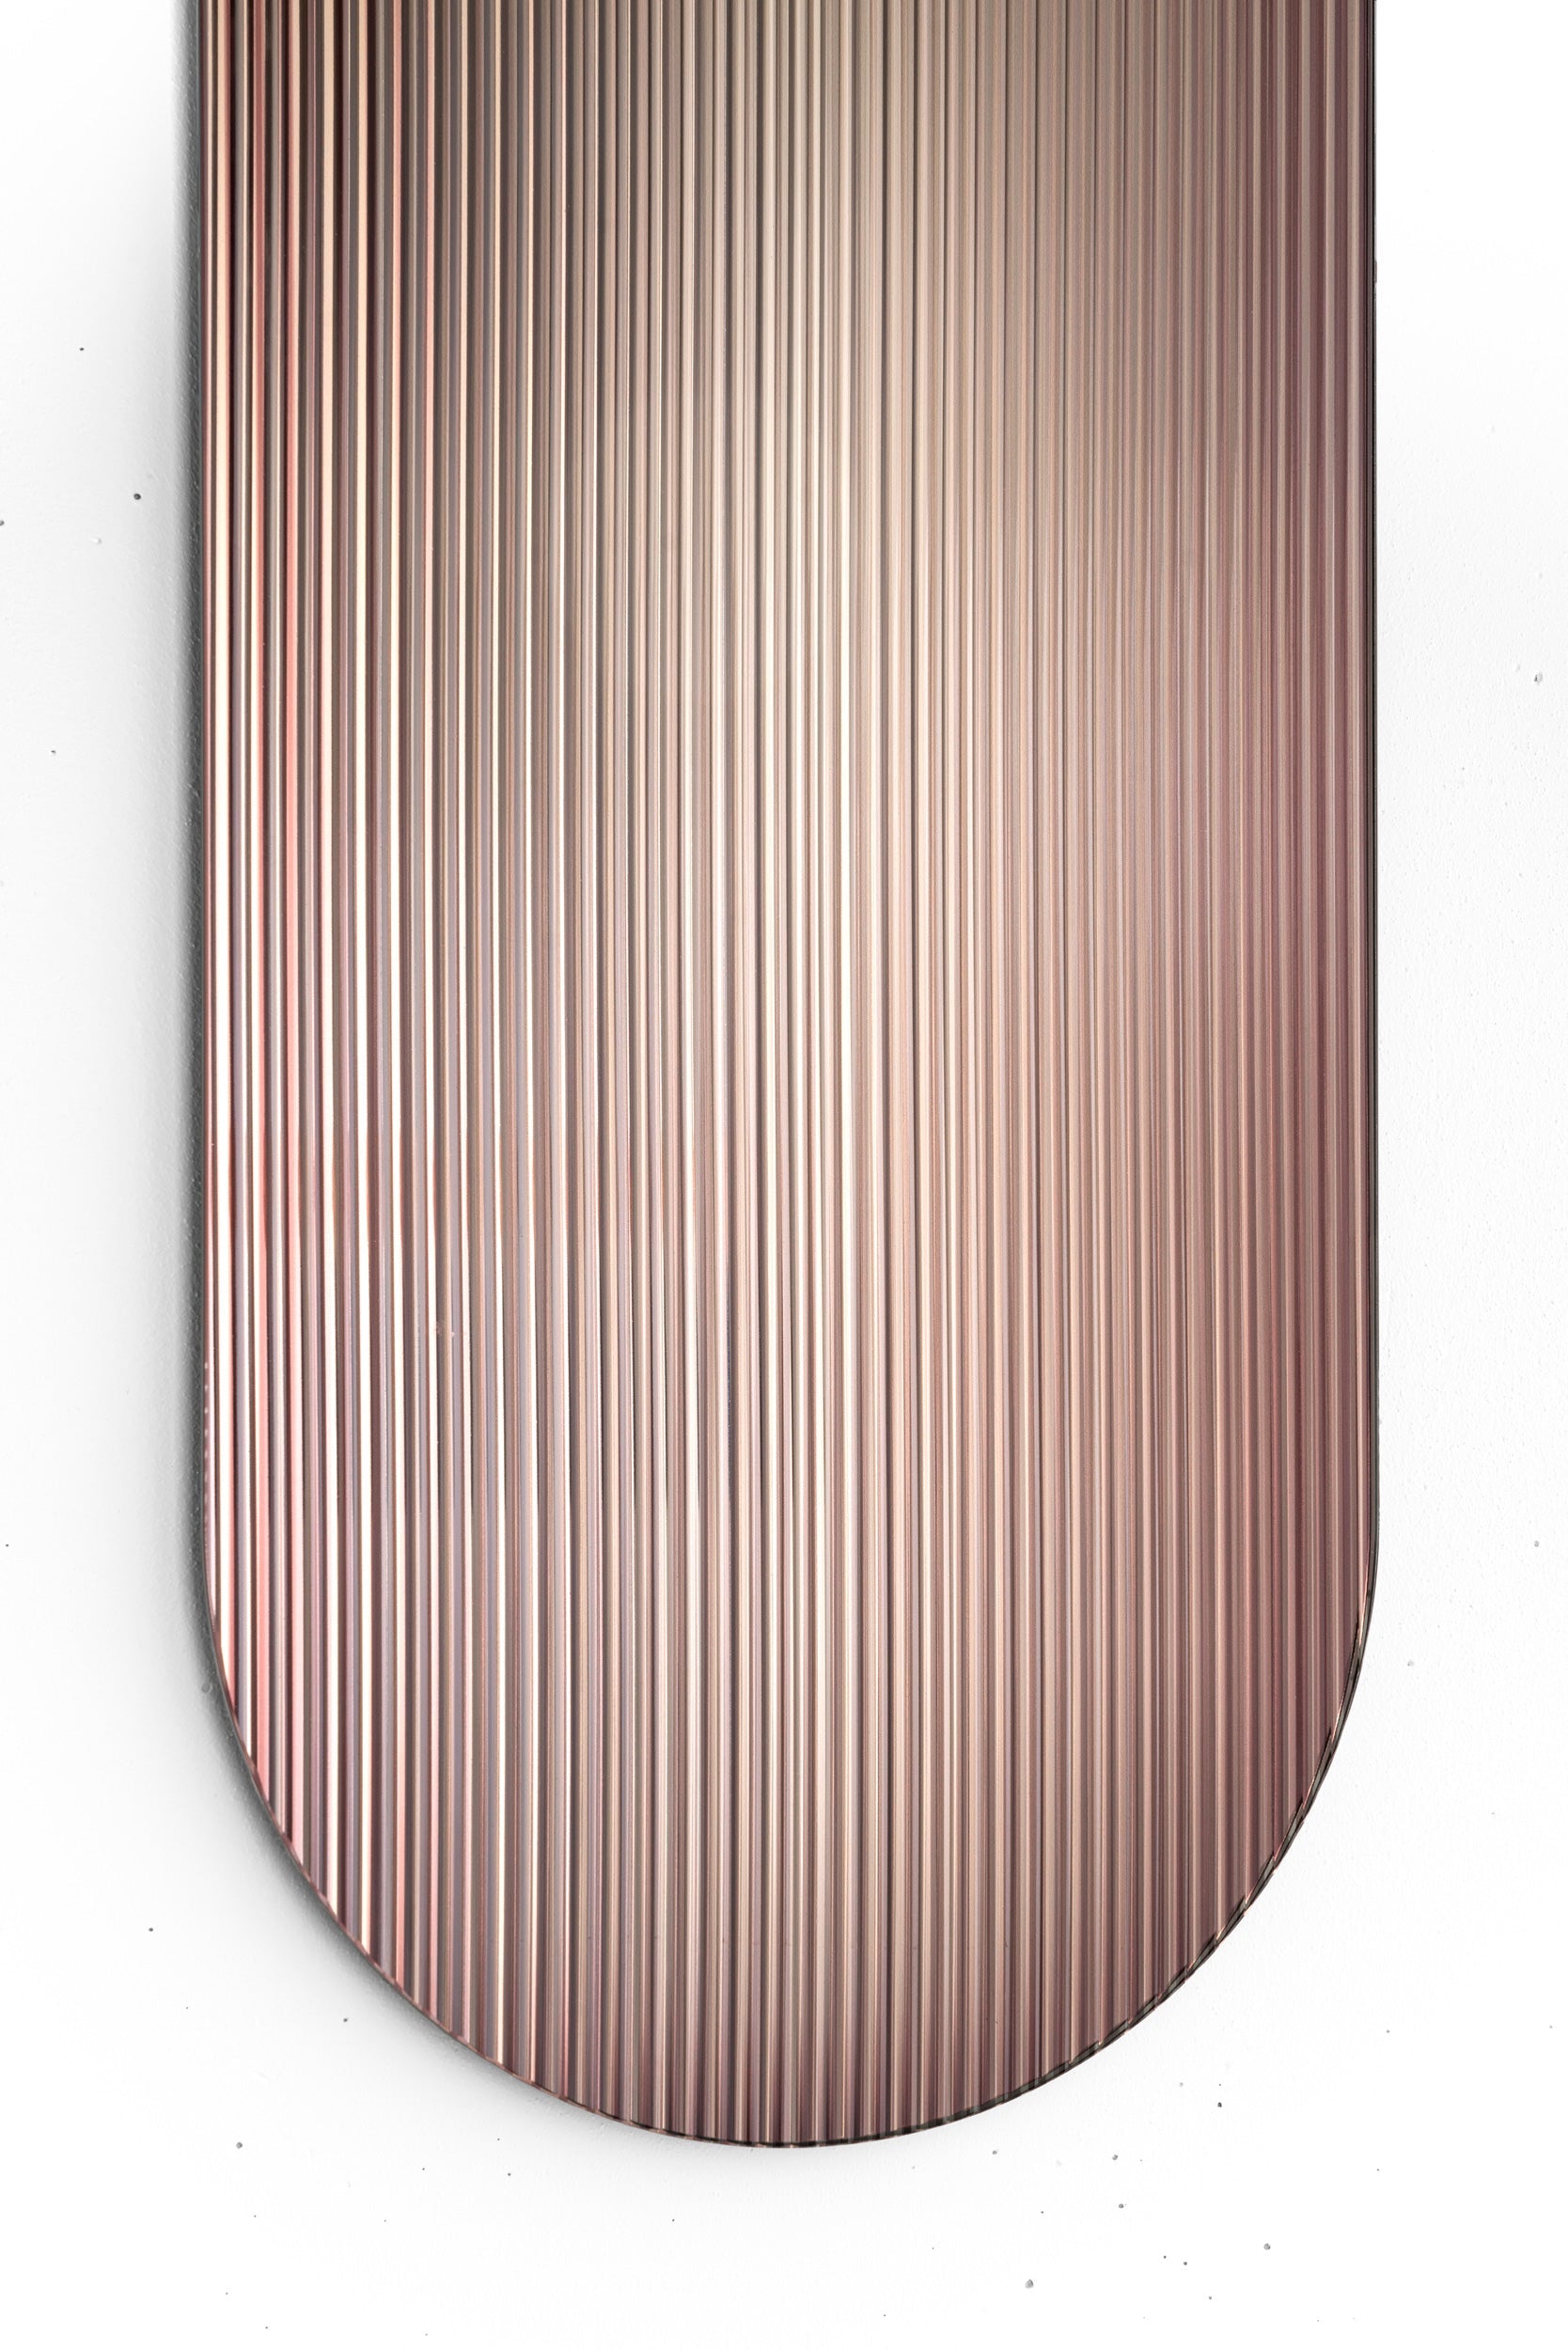 Metal Shift Bronze Reflective Art Panel by Rive Roshan